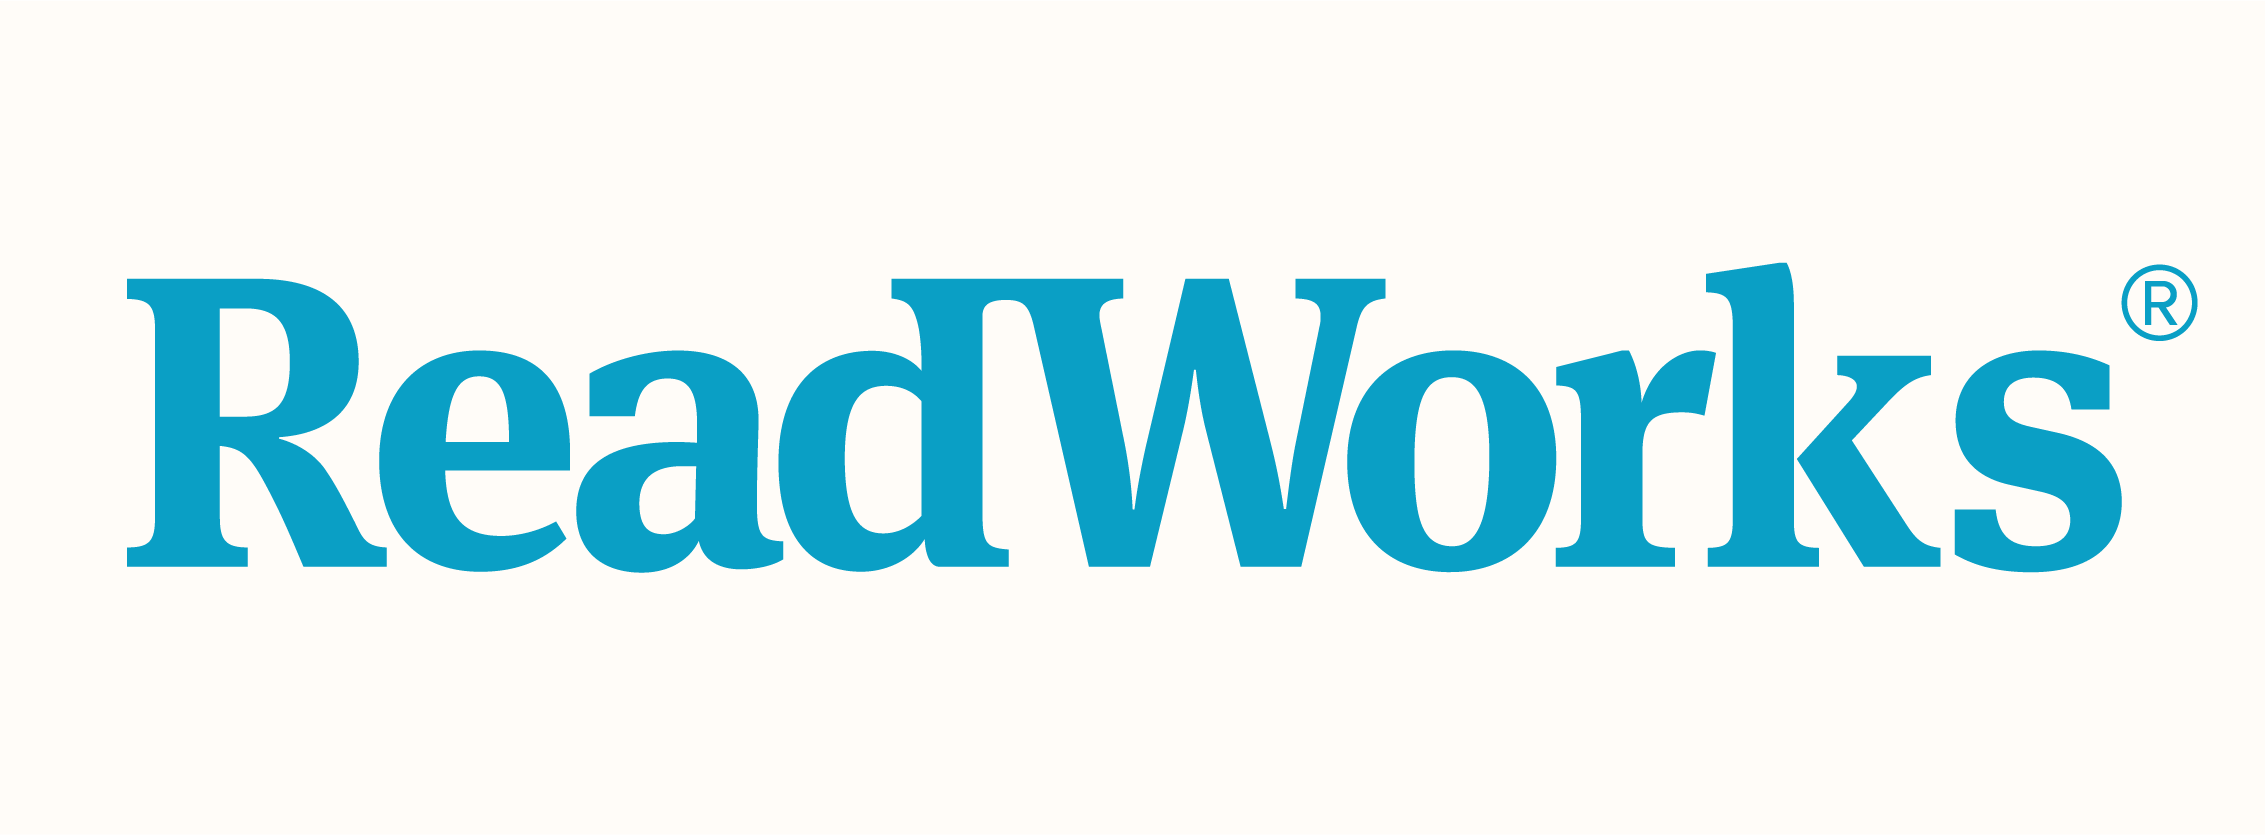 readworks-logo.png